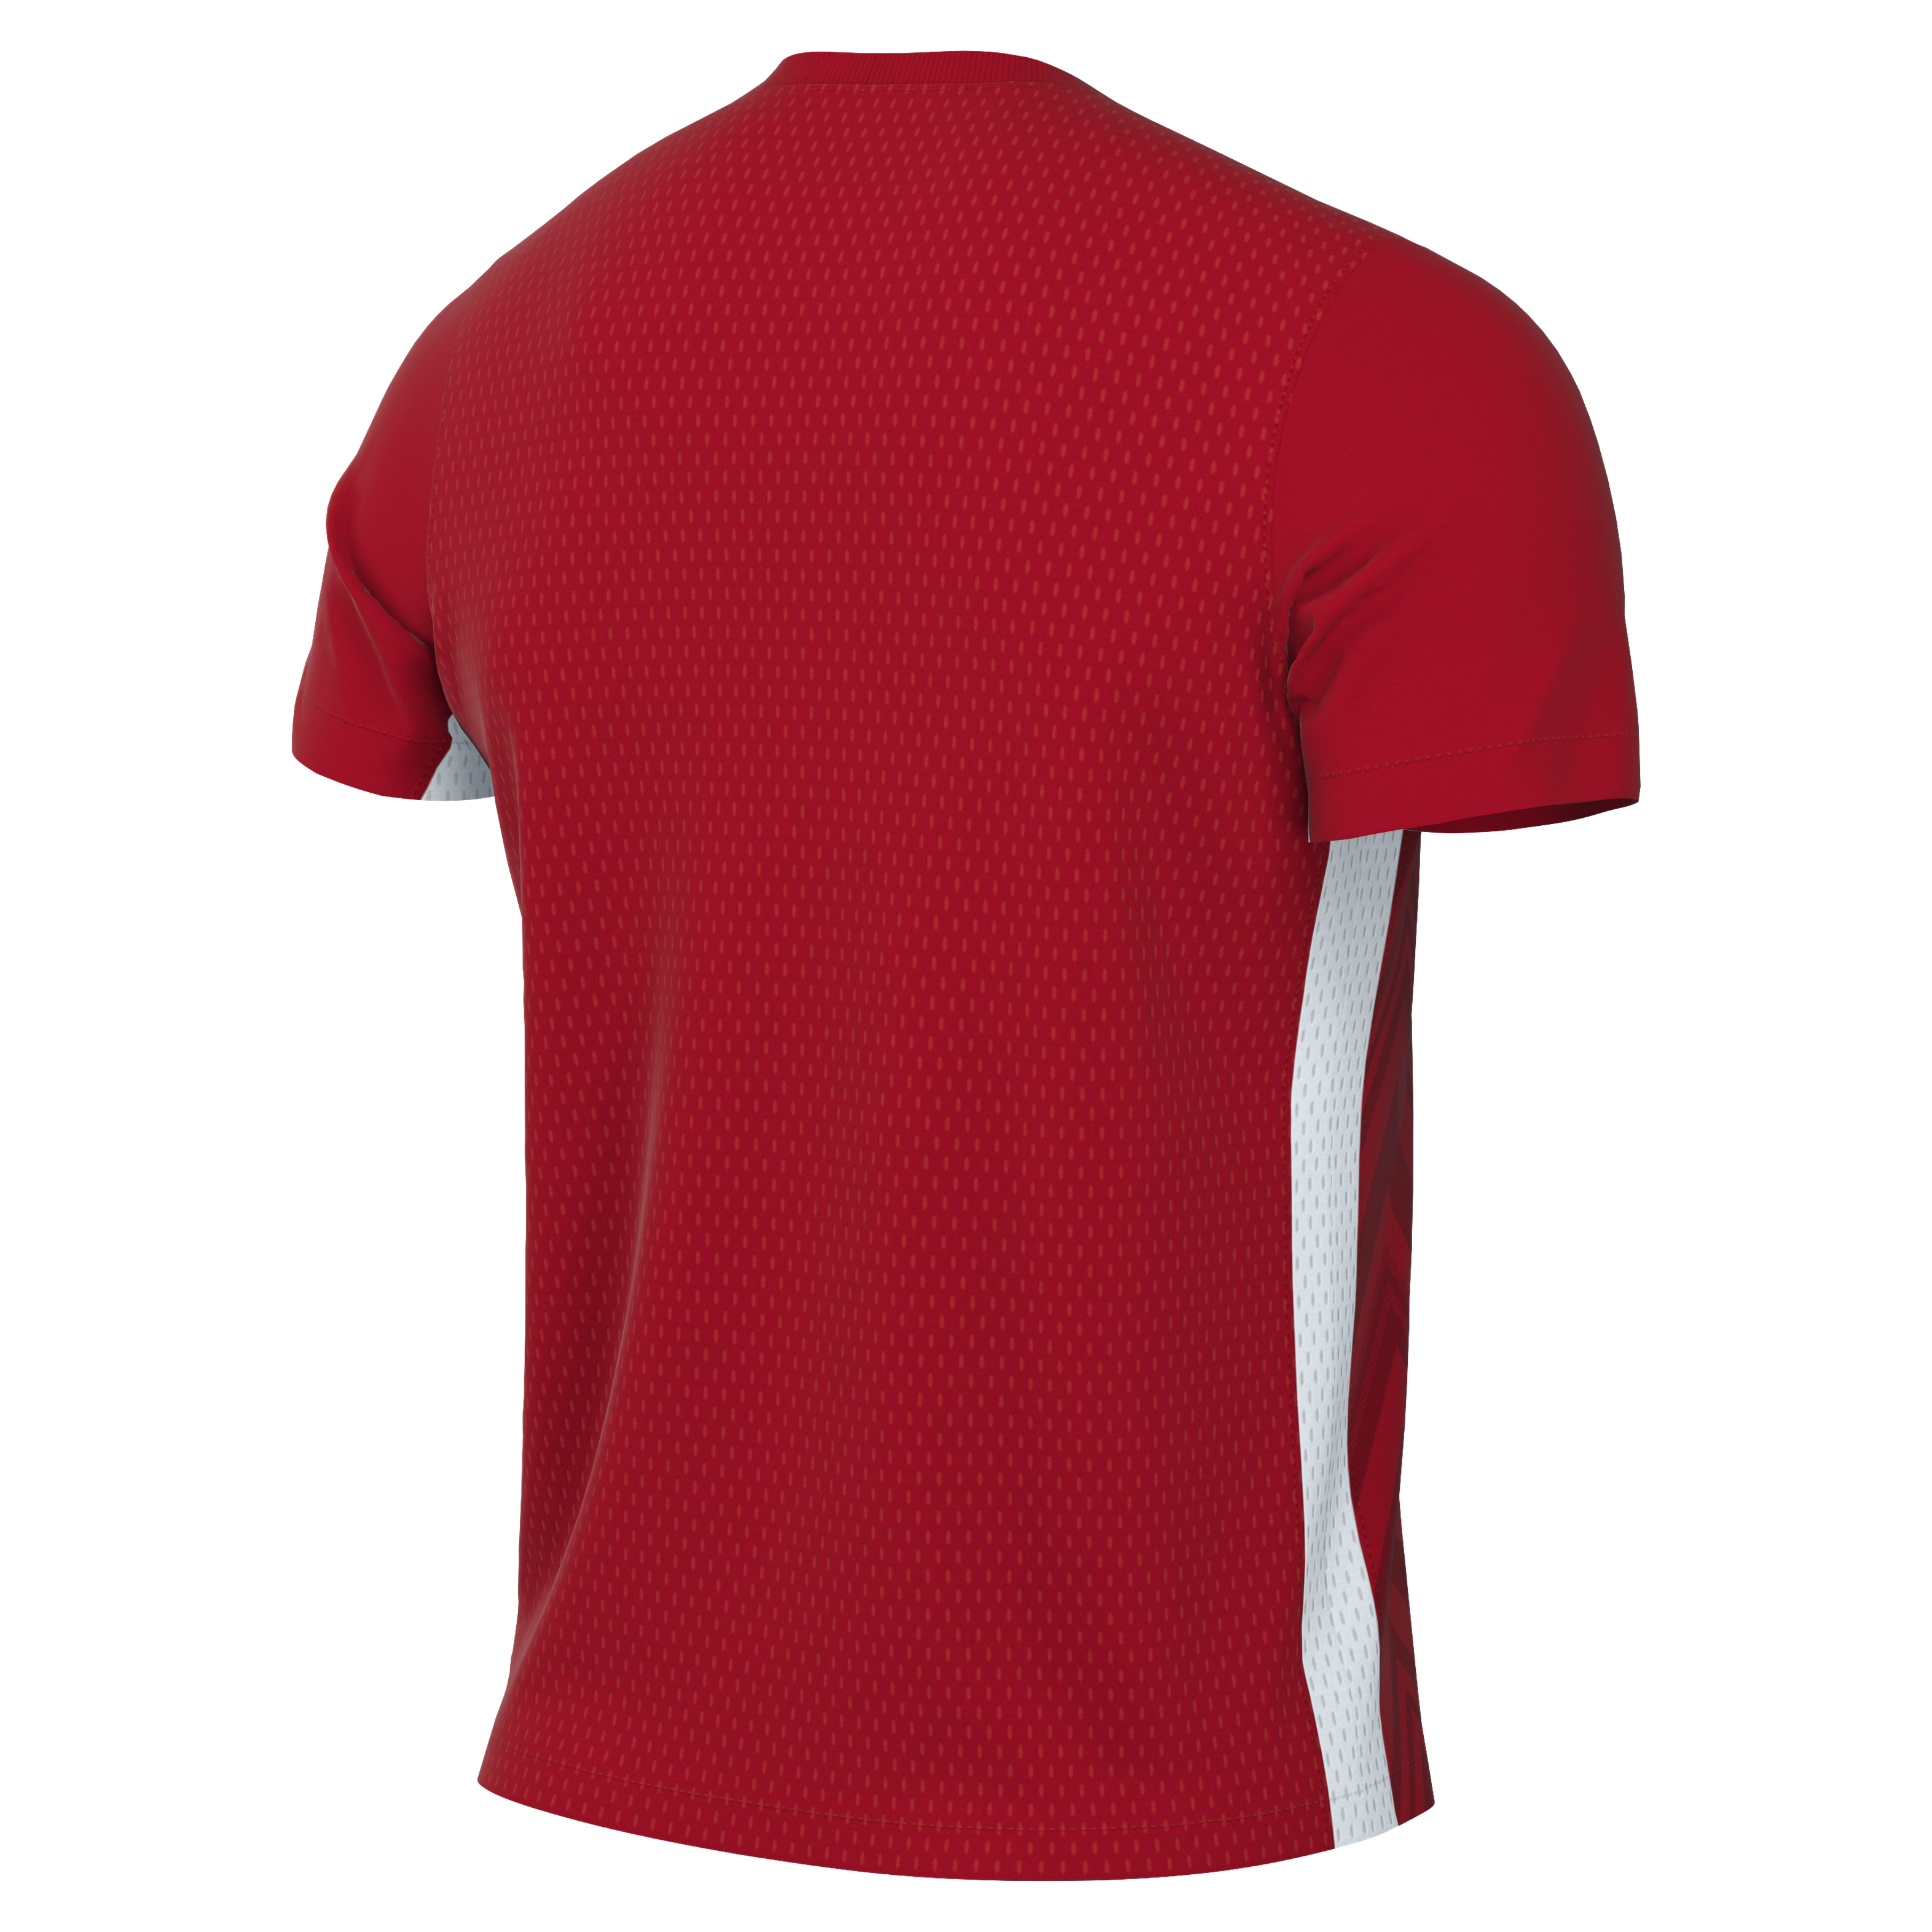 Nike Dri-FIT Challenge Jersey V Short Sleeve